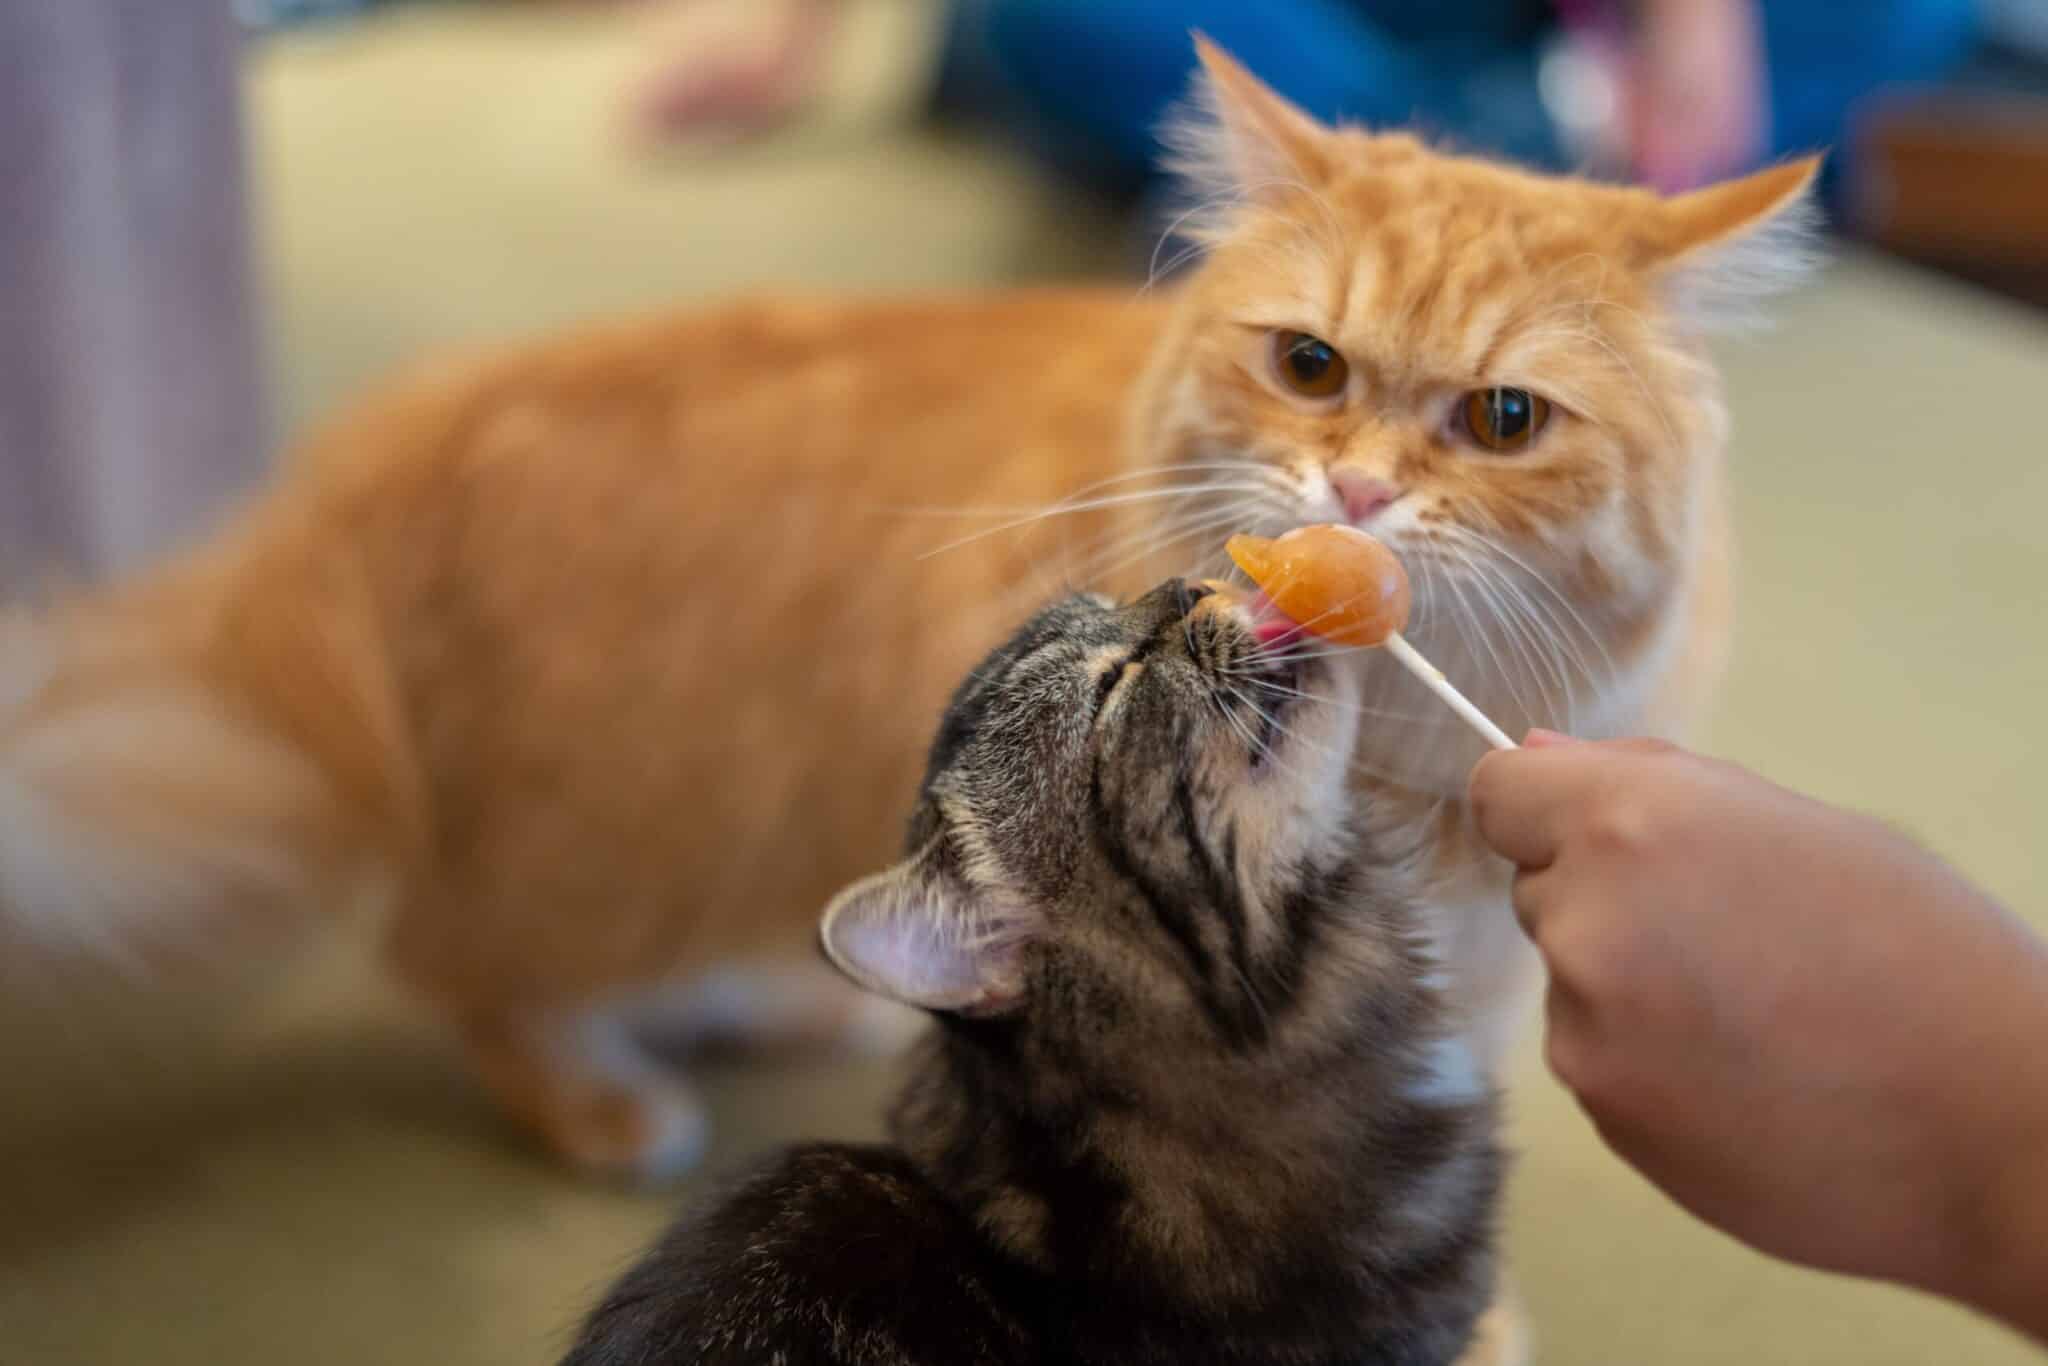 Cats licking treat